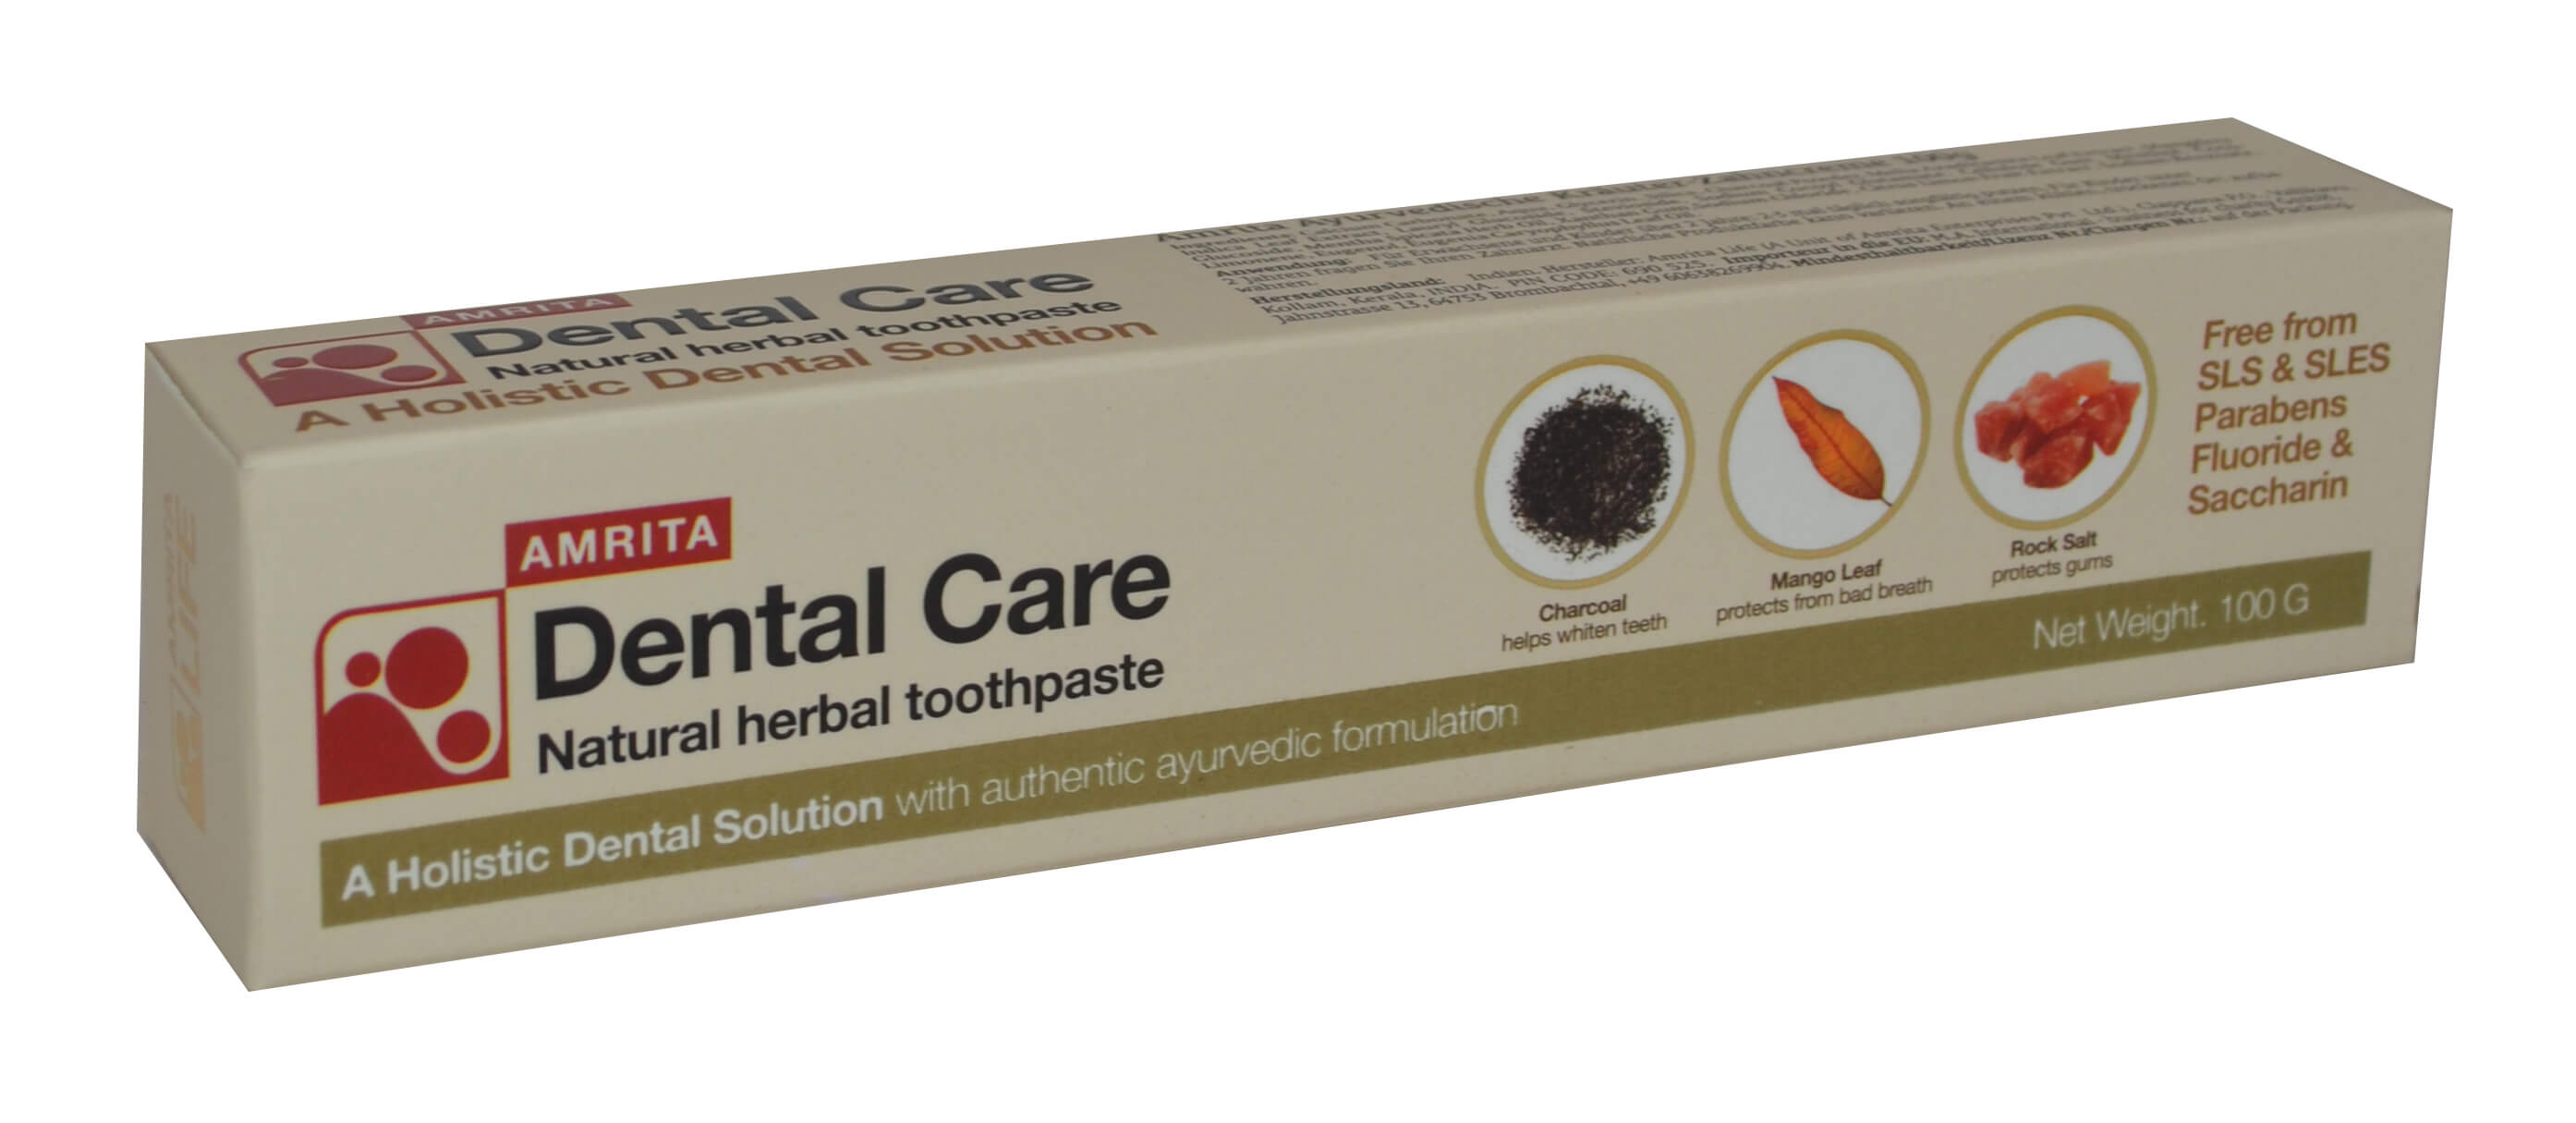 Ayurvedic herbal toothpaste - Amrita